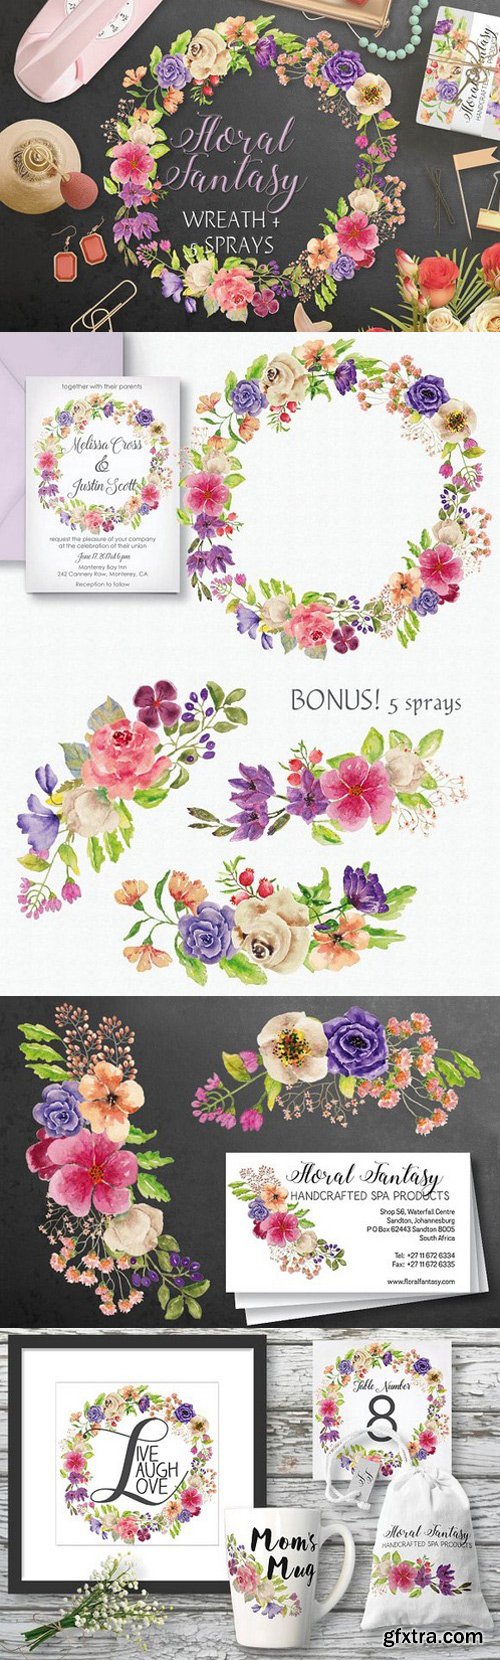 CM - Watercolor wreath of mixed florals 1481621